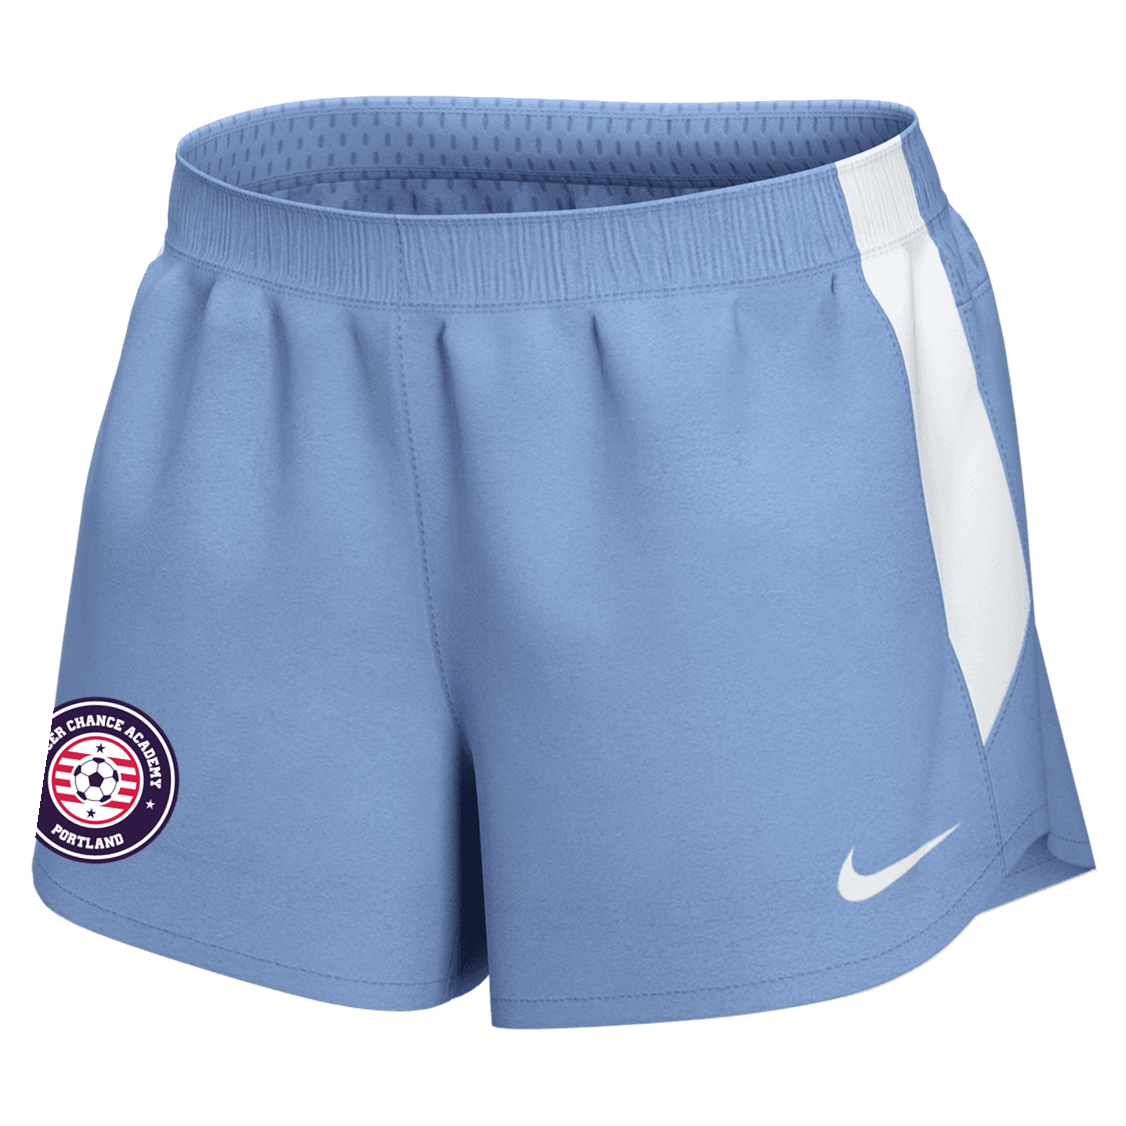 SCA Blue Shorts [Women's]